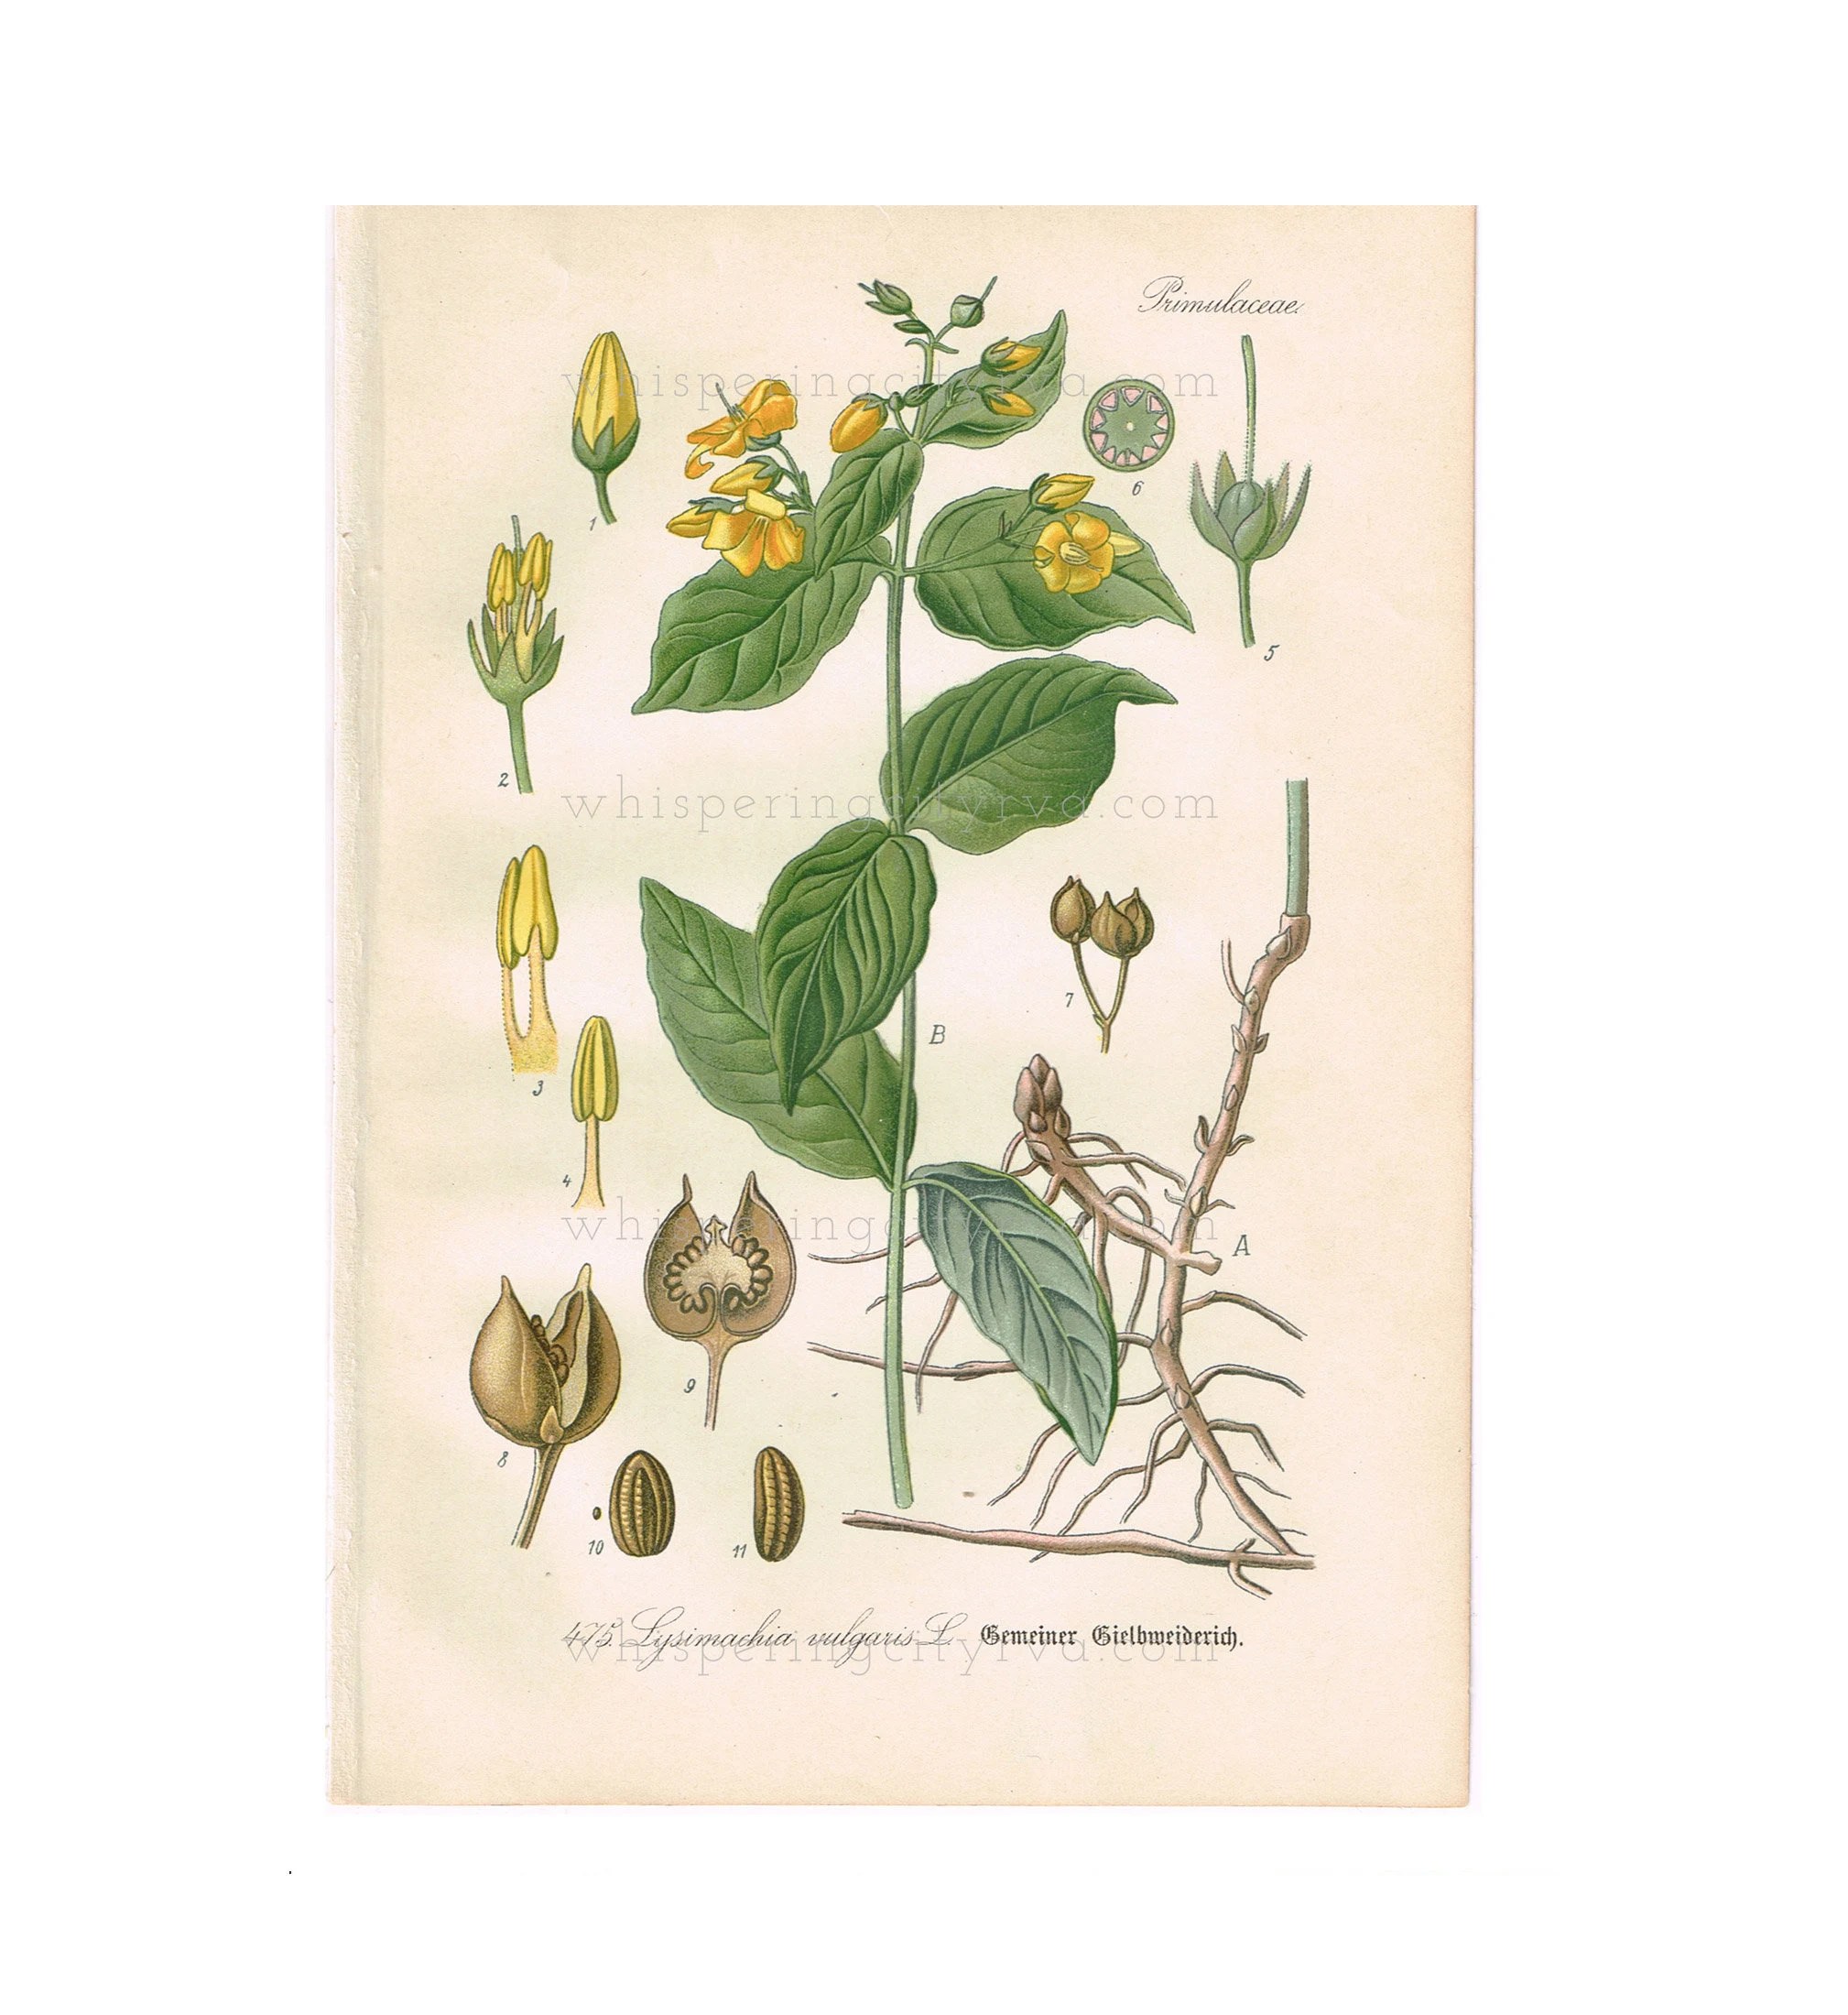 1903 Antique Botanical Chromolithograph Book Plate - Garden Loosestrife - Thome Flora von Deutschland - Floral Litho Art Print Illustration